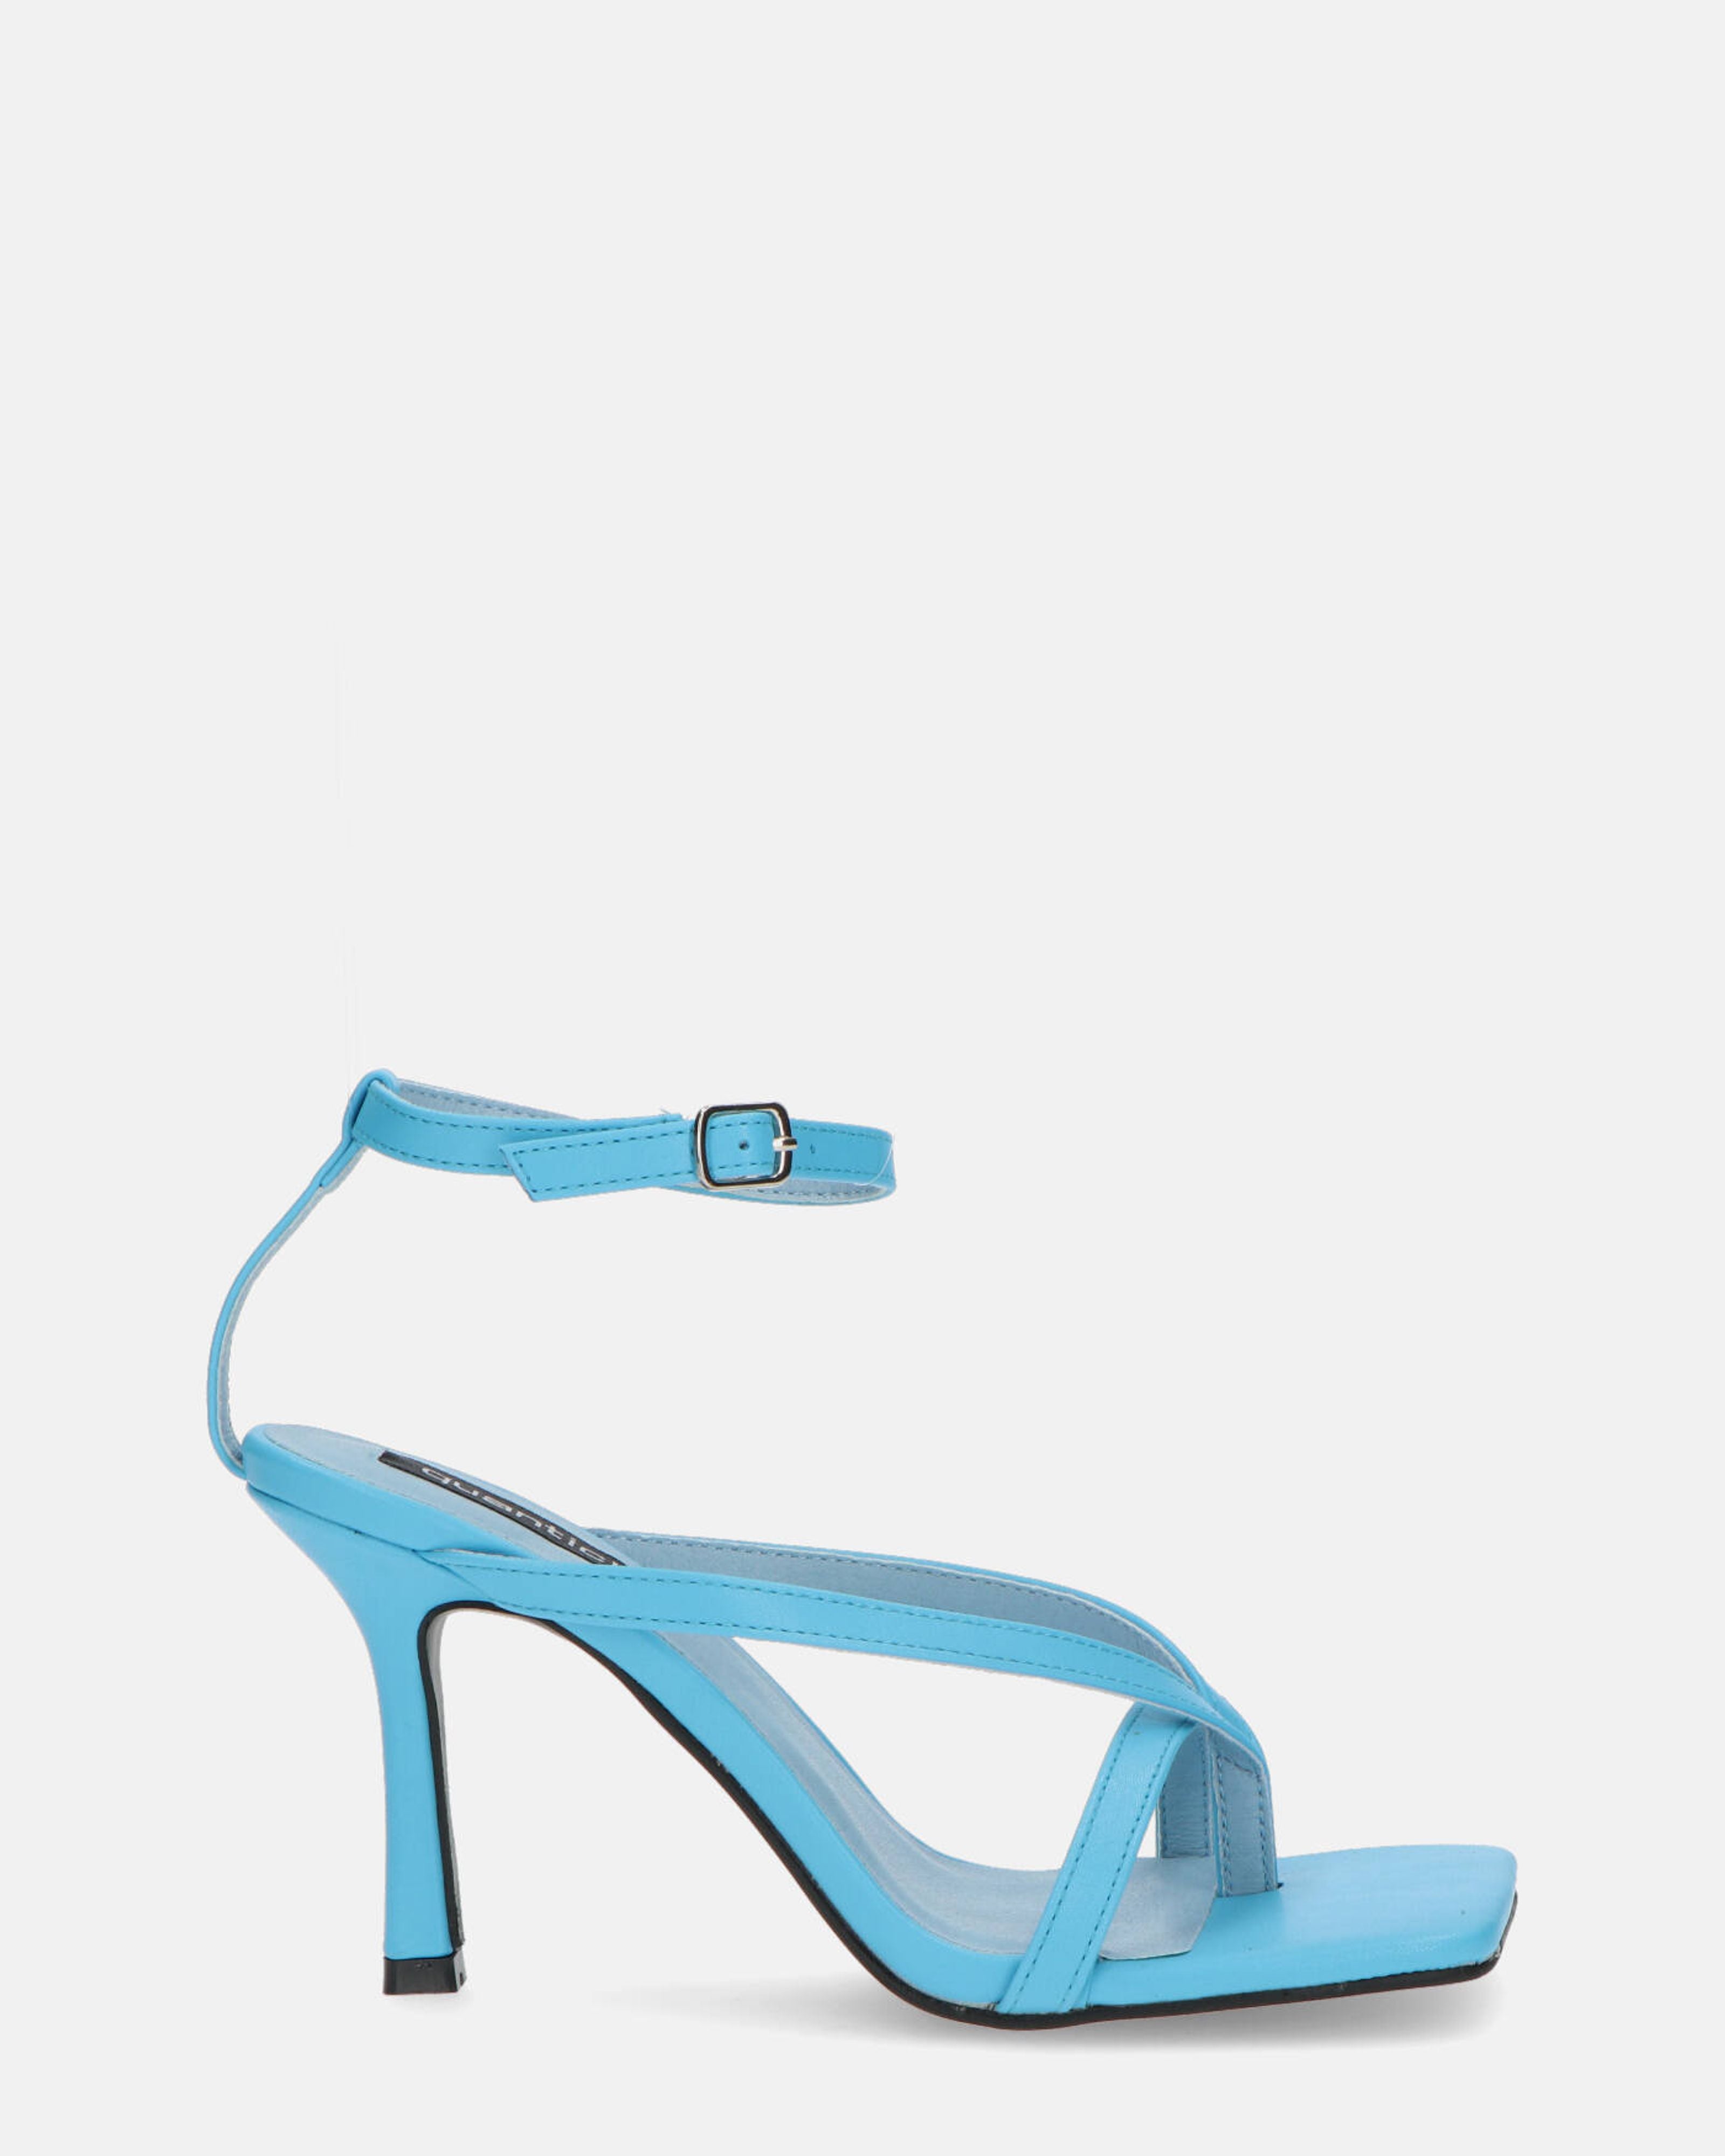 ADELE - thong sandal with blue heel